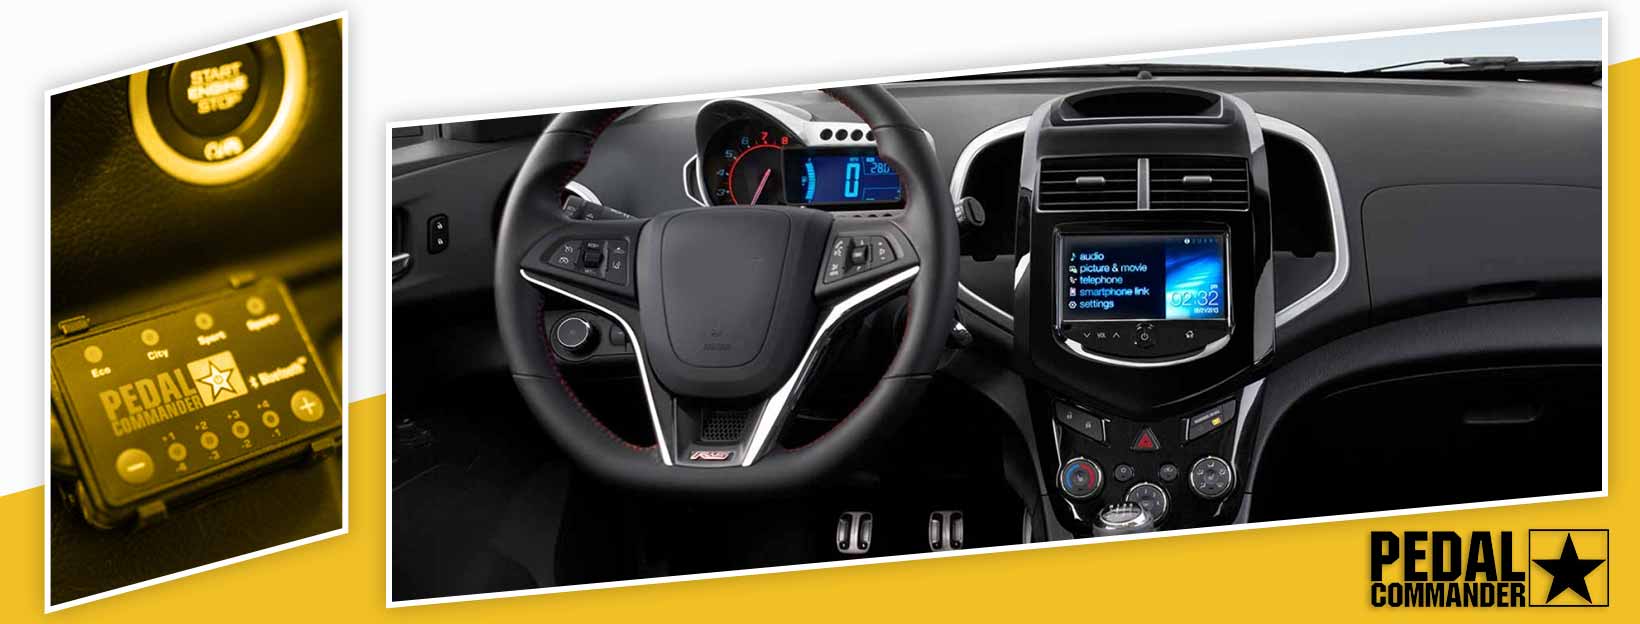 Pedal Commander for Chevrolet Sonic - interior